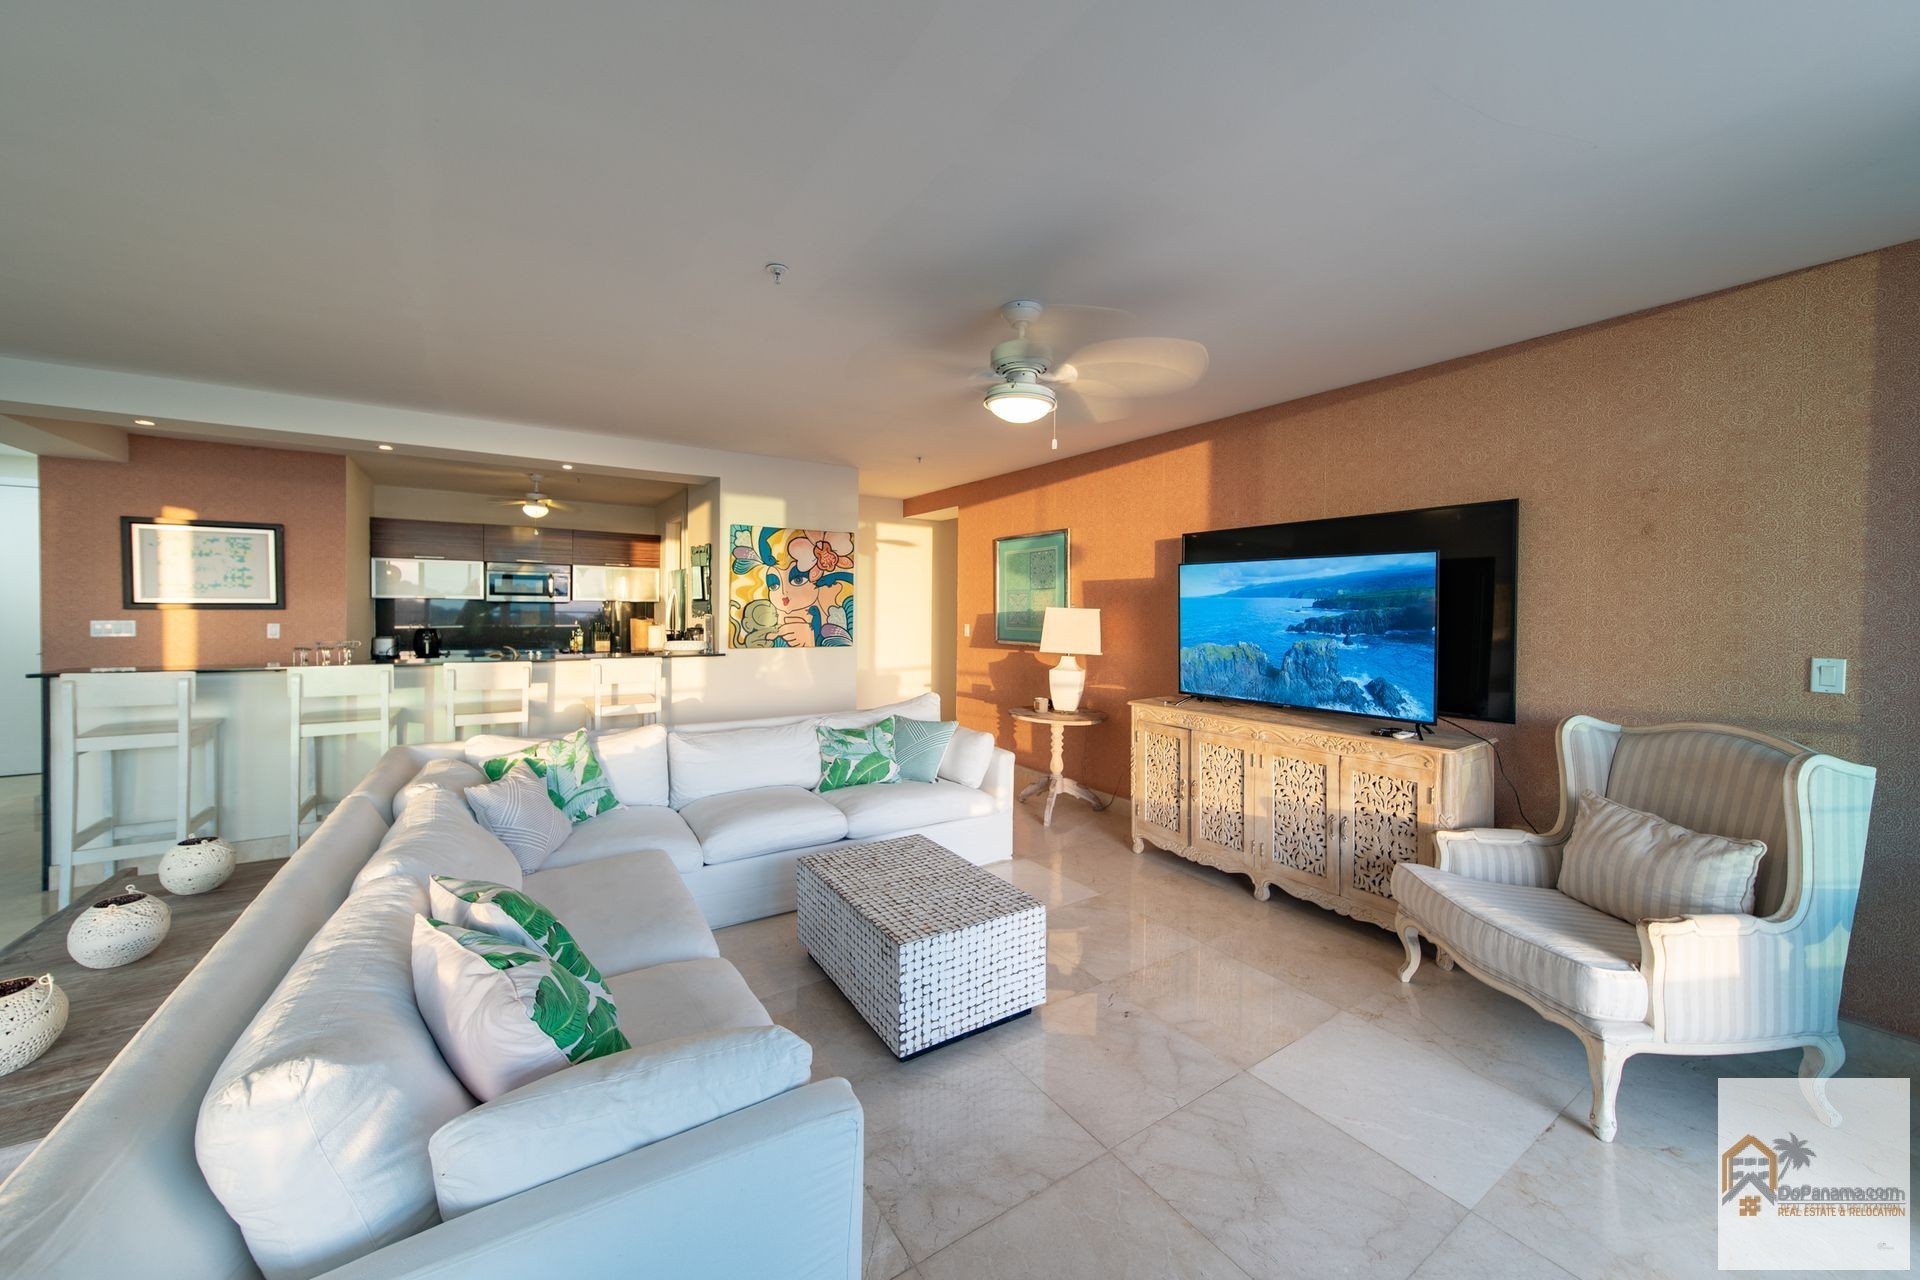 Luxurious 3-Bedroom Penthouse in Casa Bonita Condo & Beach Club - Your Paradise Awaits